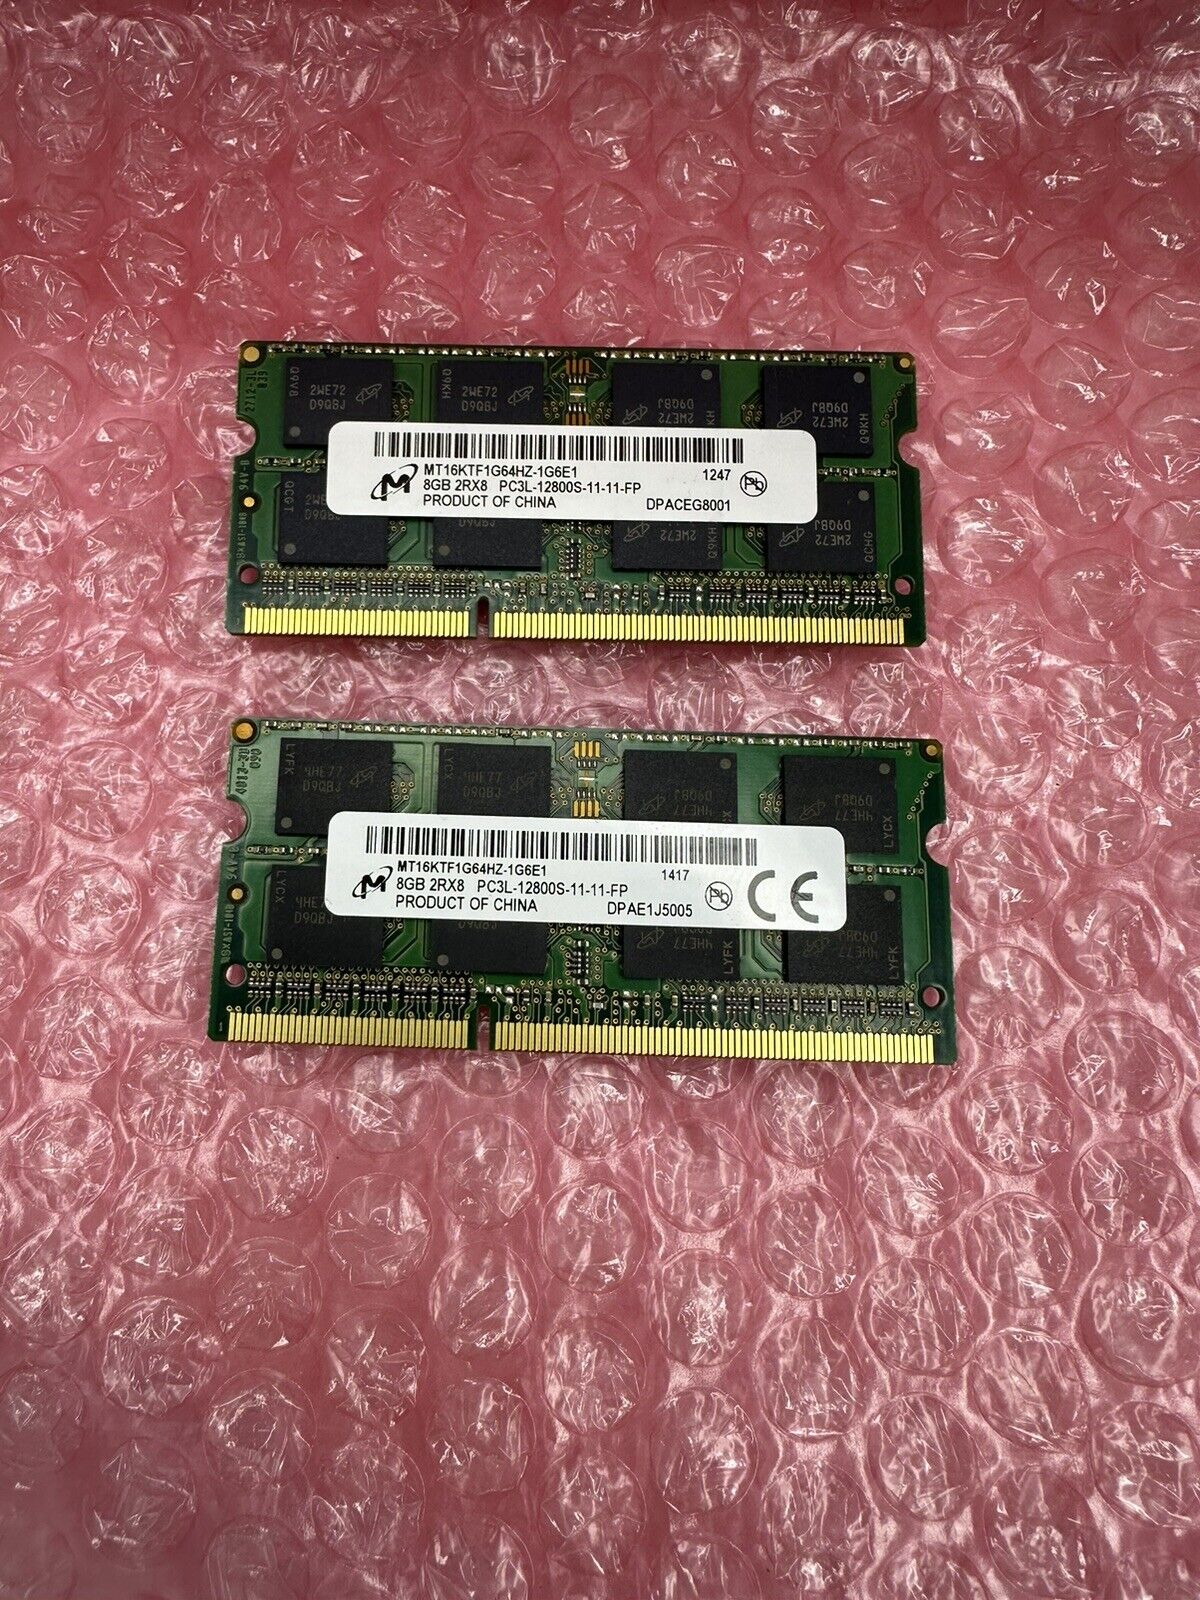 MICRON 16GB (2 x 8GB) PC3L-12800S DDR3-1600 Laptop  Memory MT16KTF1G64HZ-1G6E